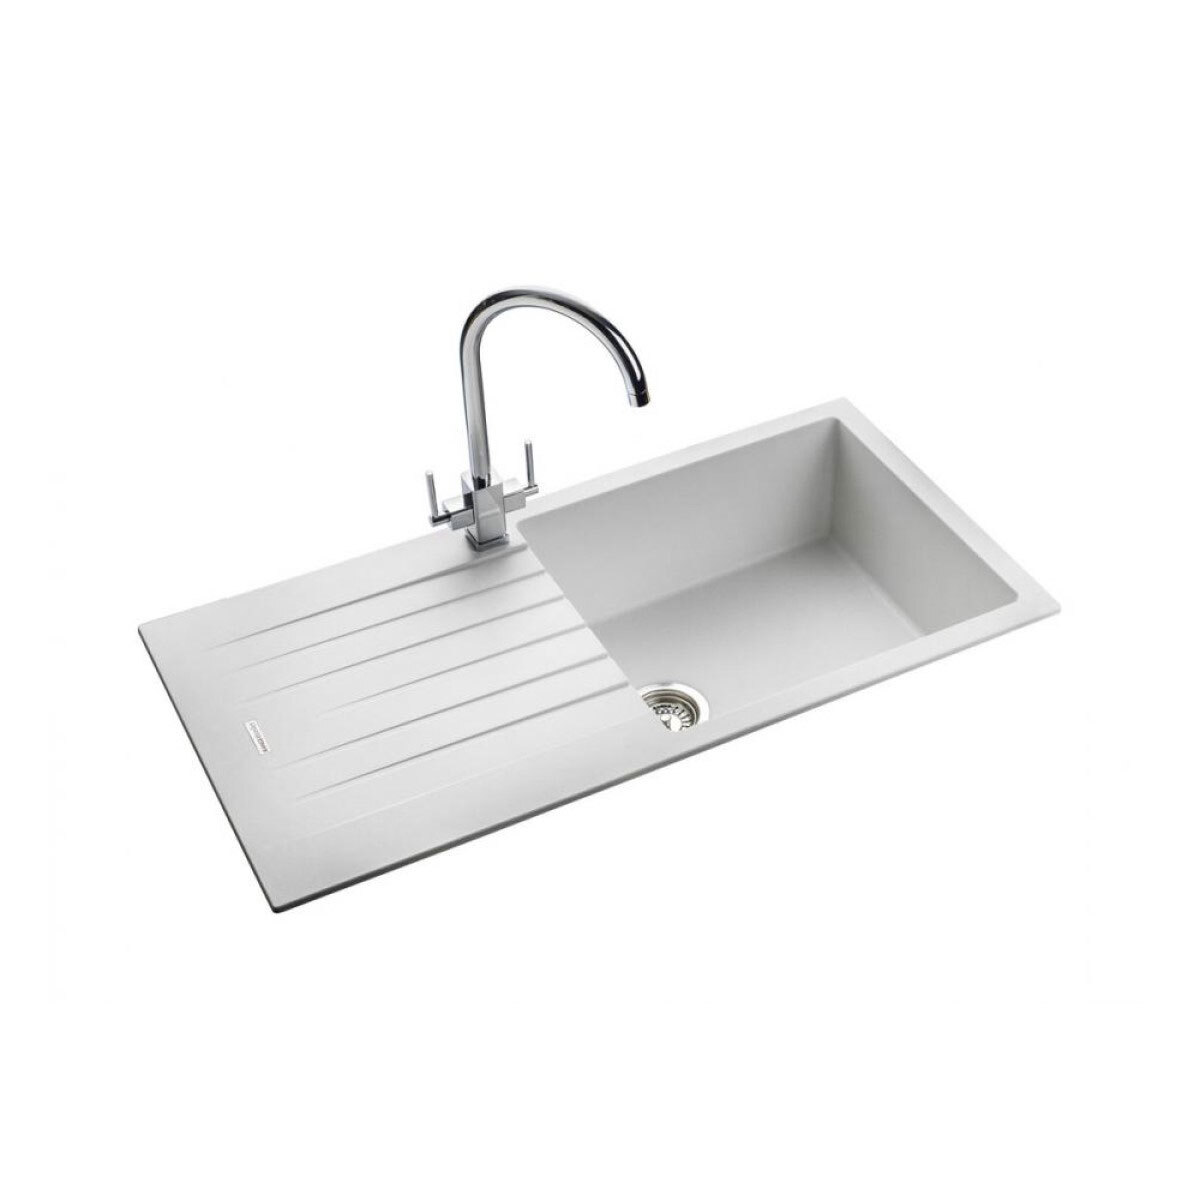 Rangemaster Andesite Composite Granite Single Bowl Kitchen Sink in 2 Colours